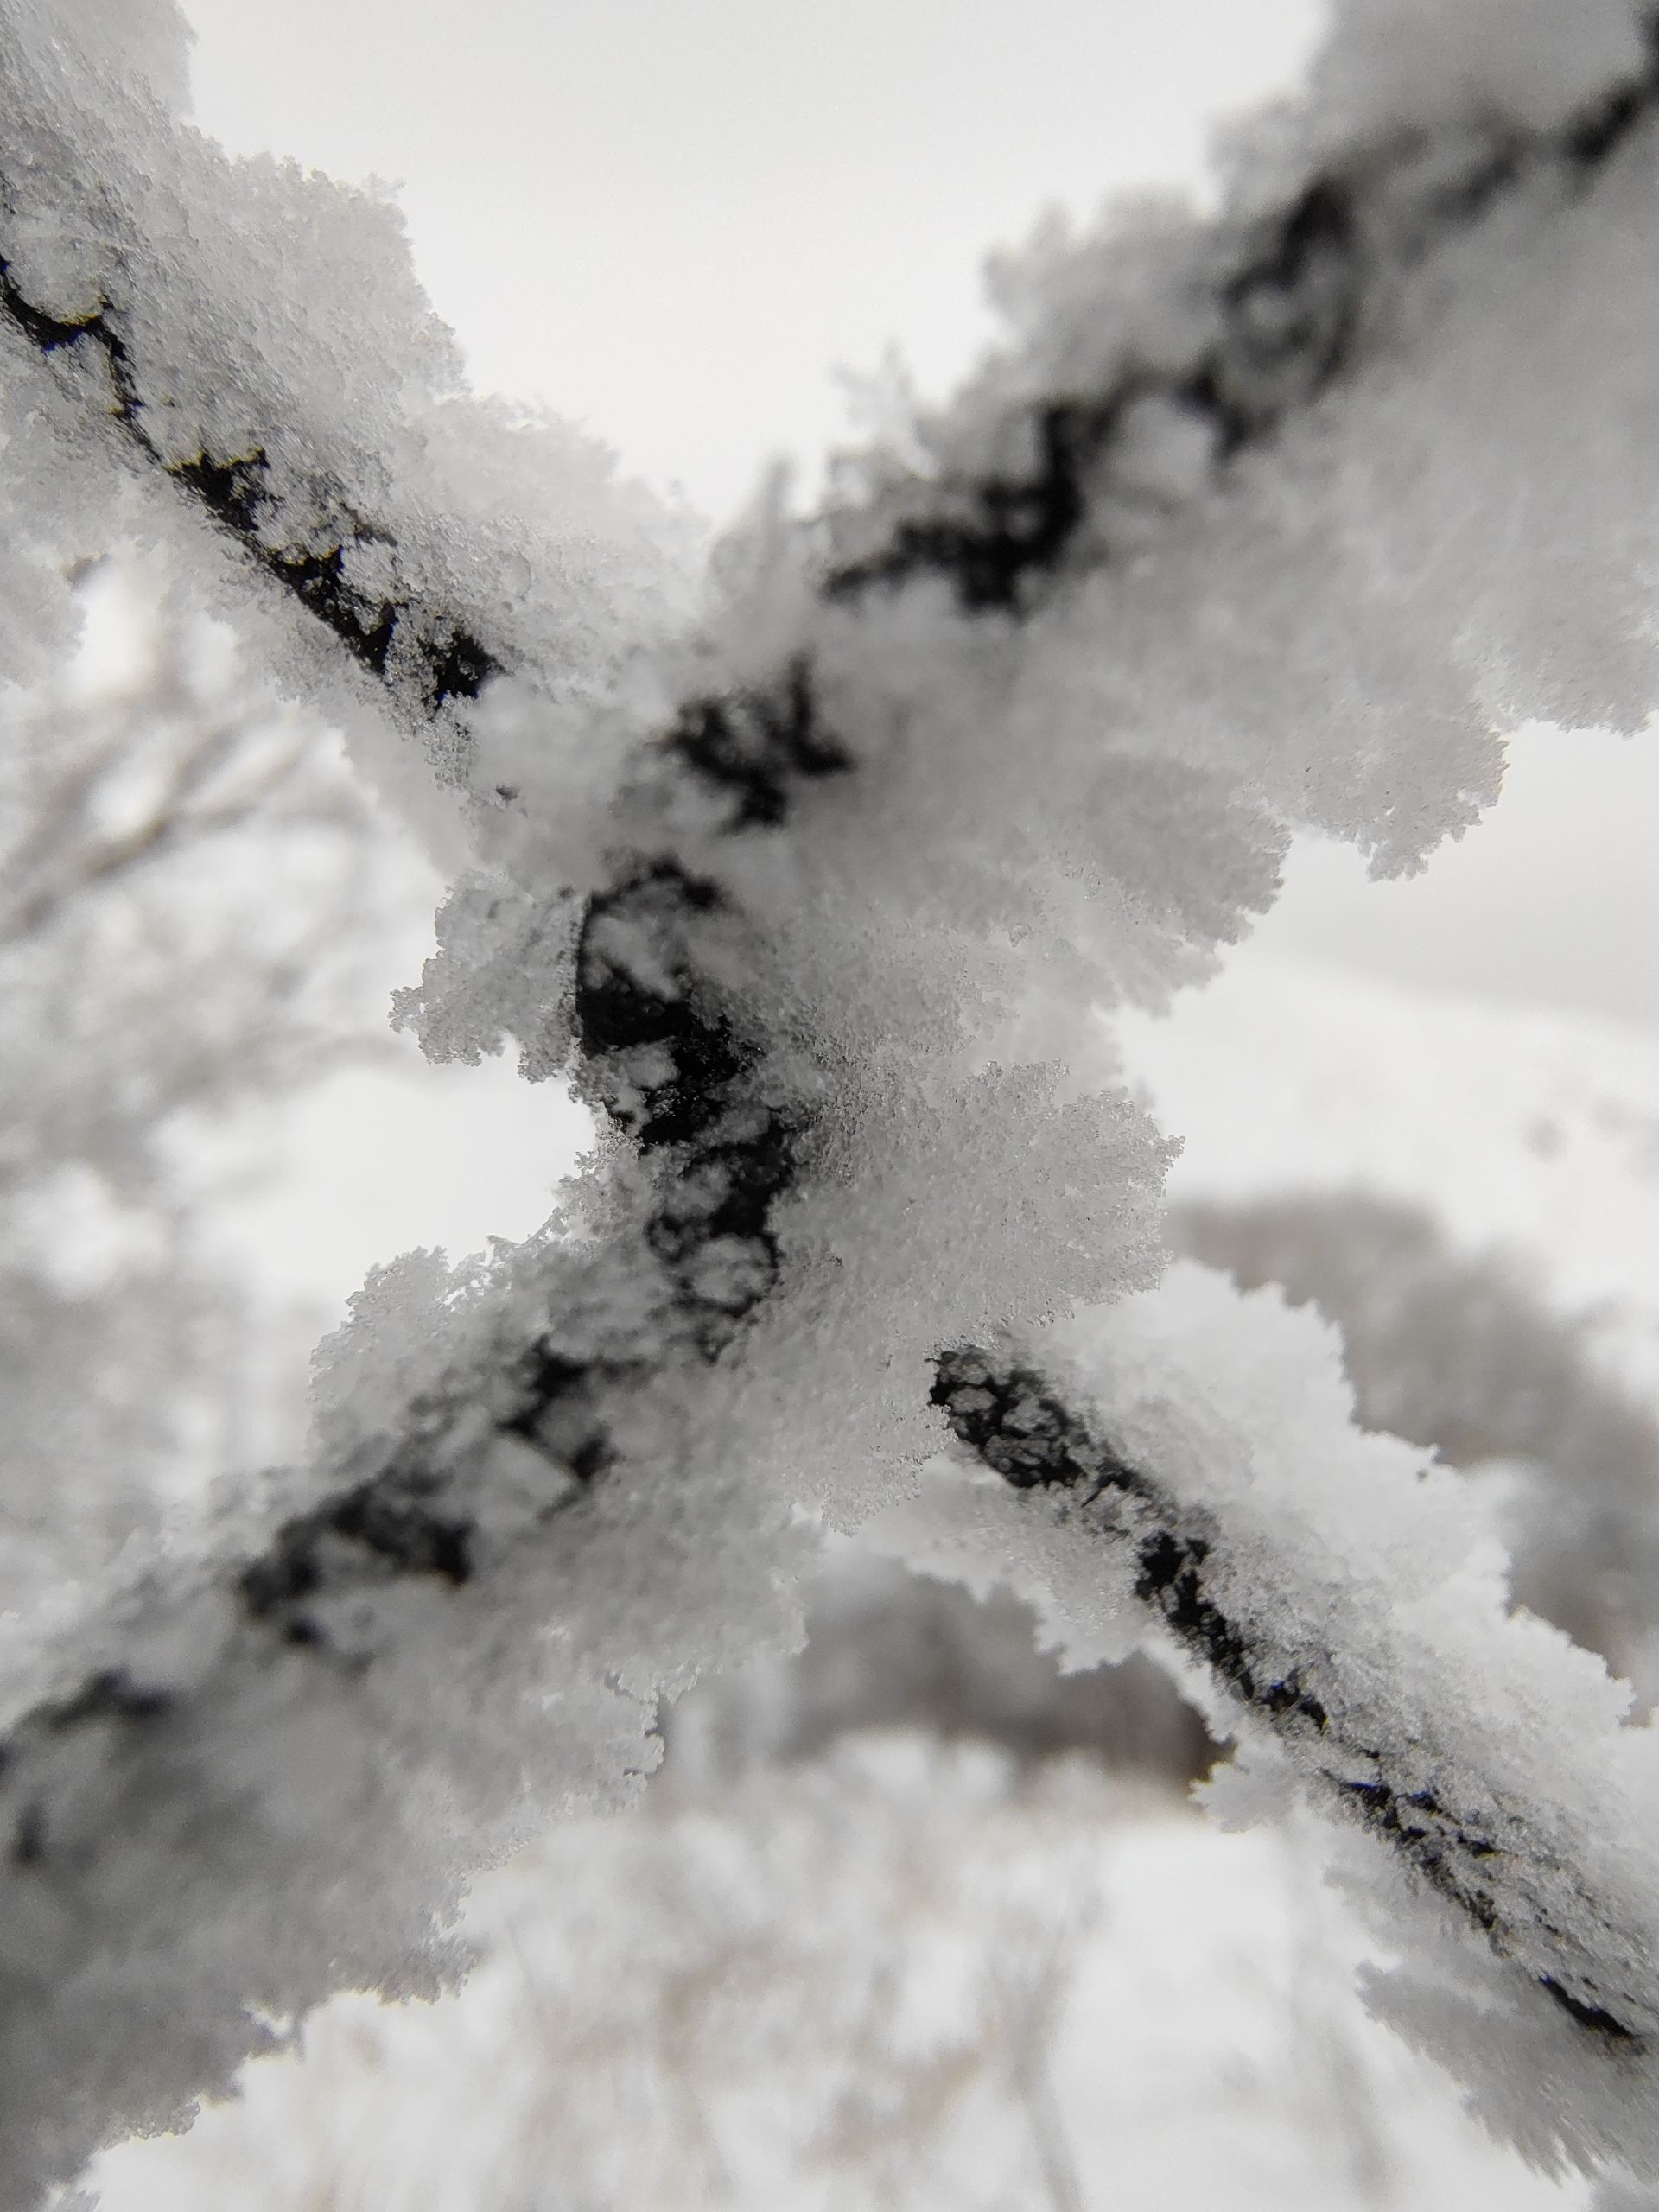 عکس ماکرو موتورولا اج ۳۰ فیوژن از برف